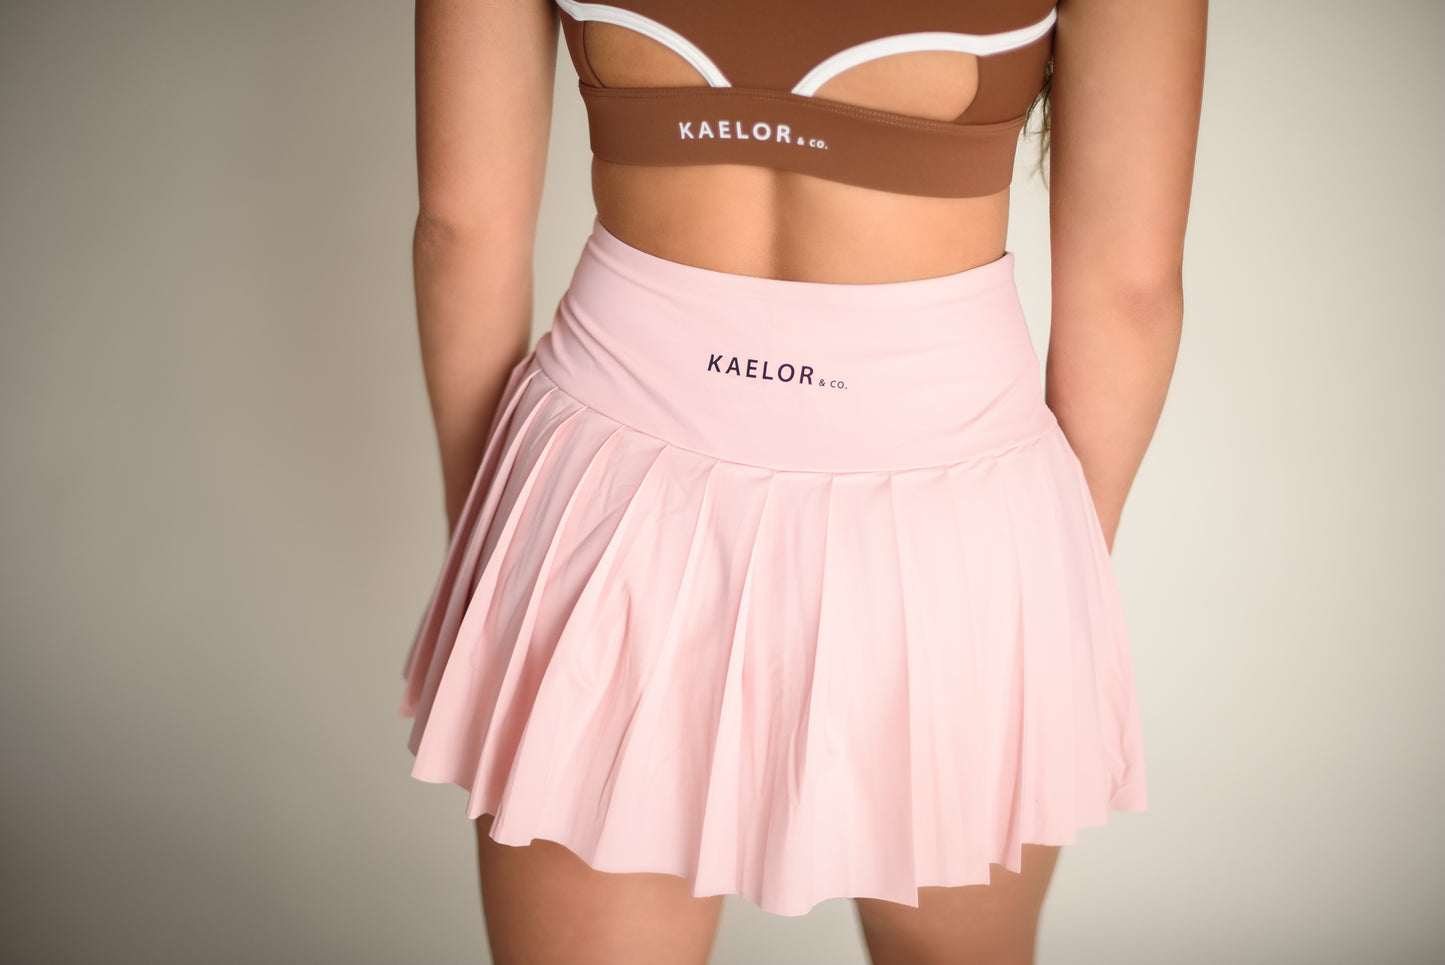 The Kaelor Pleated Skirt